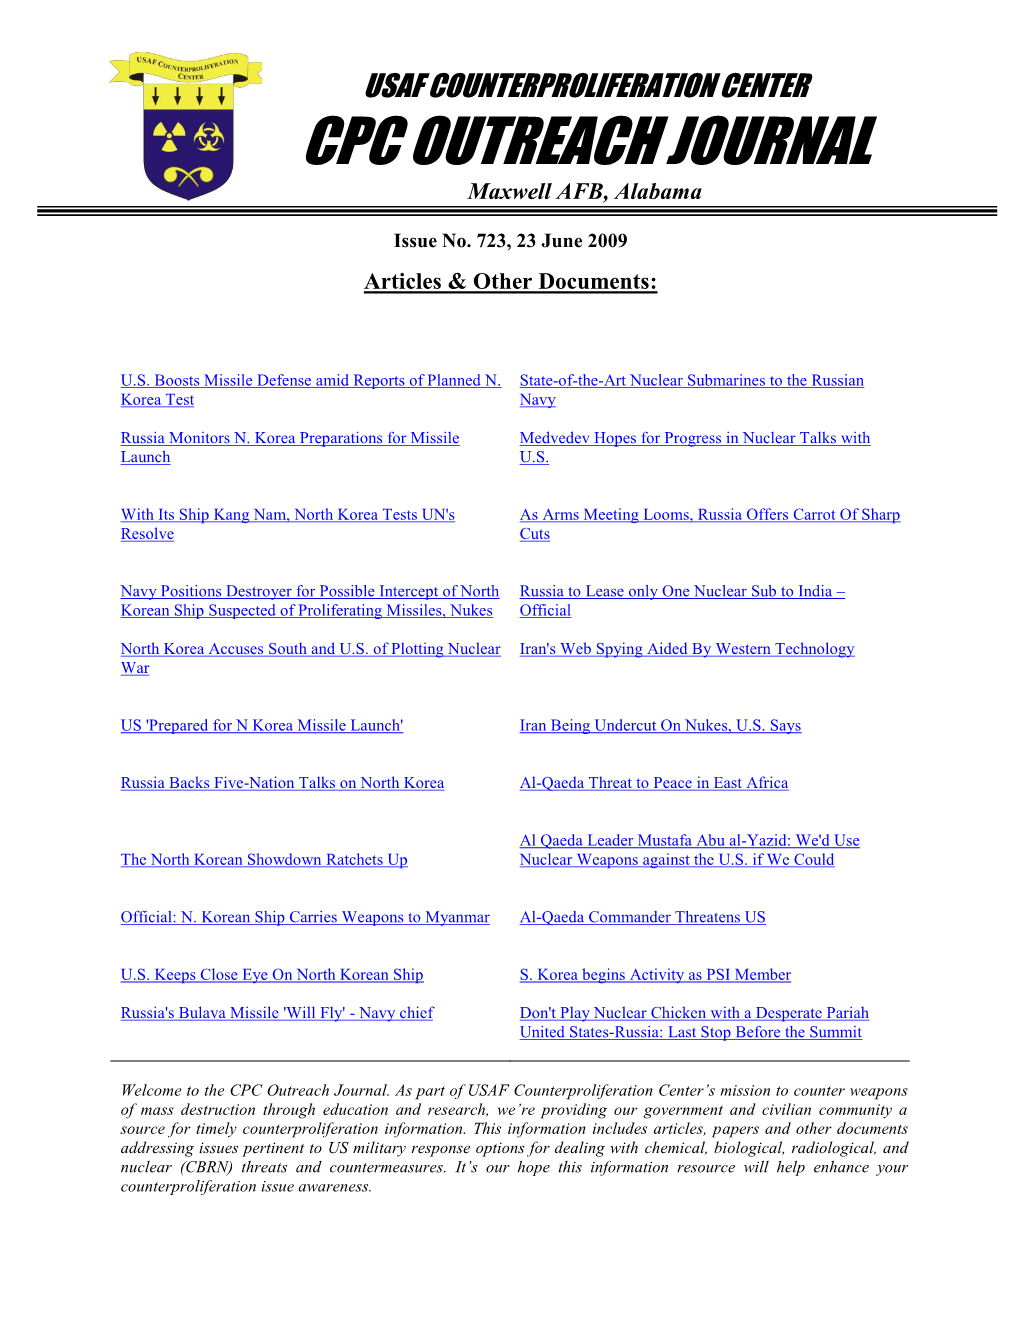 USAF Counterproliferation Center CPC Outreach Journal #723